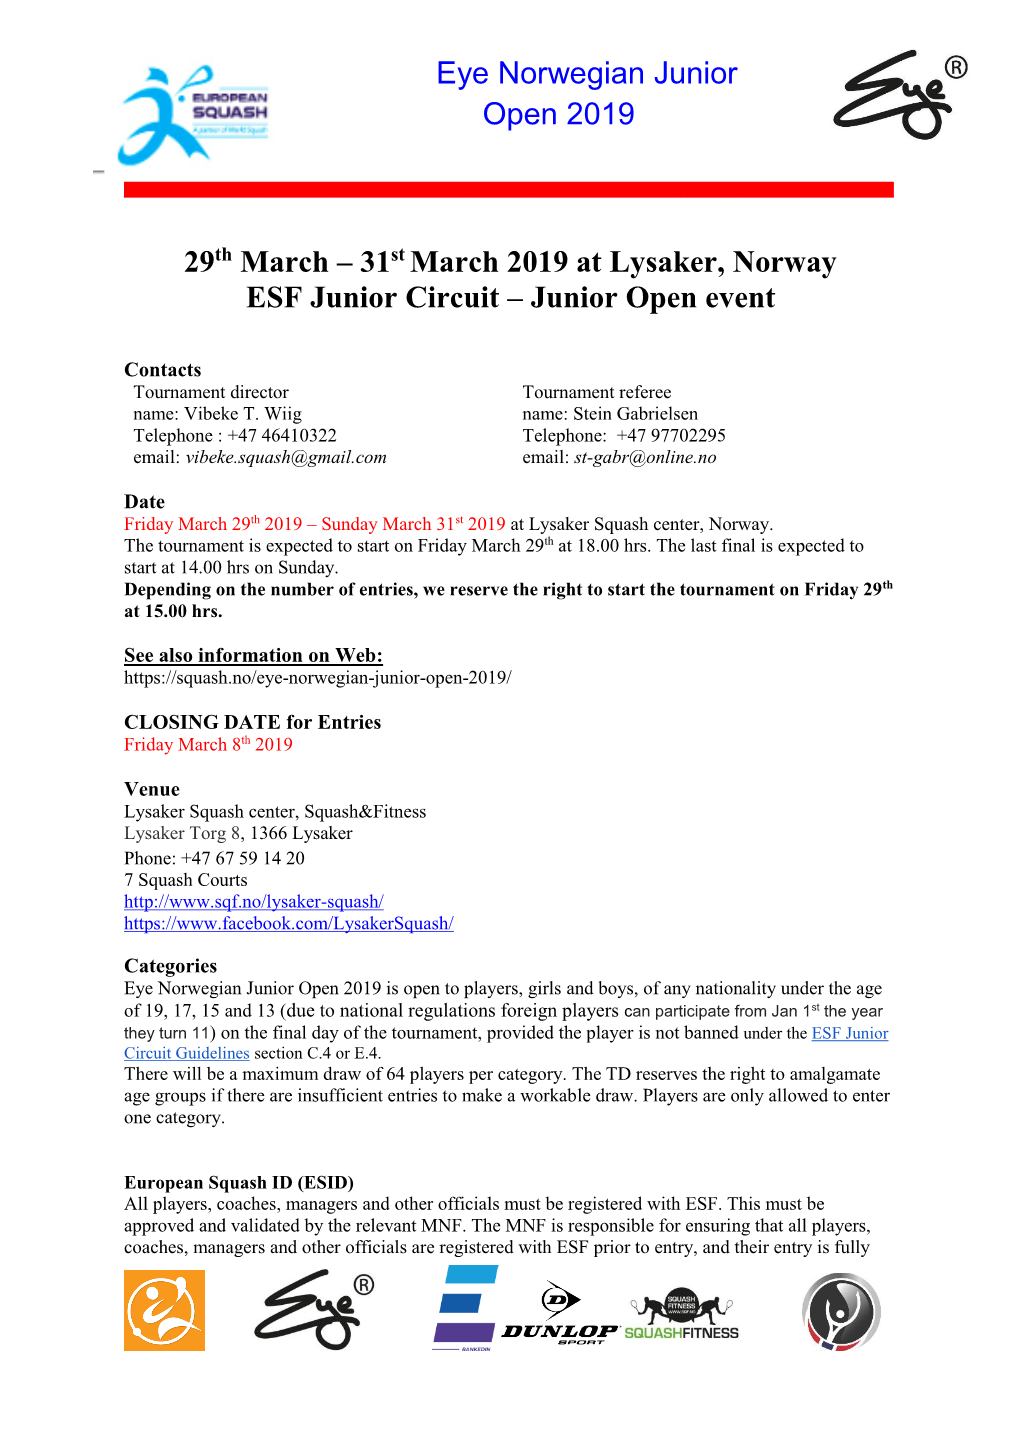 Eye Norwegian Junior Open 2019 29Th March – 31St March 2019 at Lysaker, Norway ESF Junior Circuit – Junior Open Event